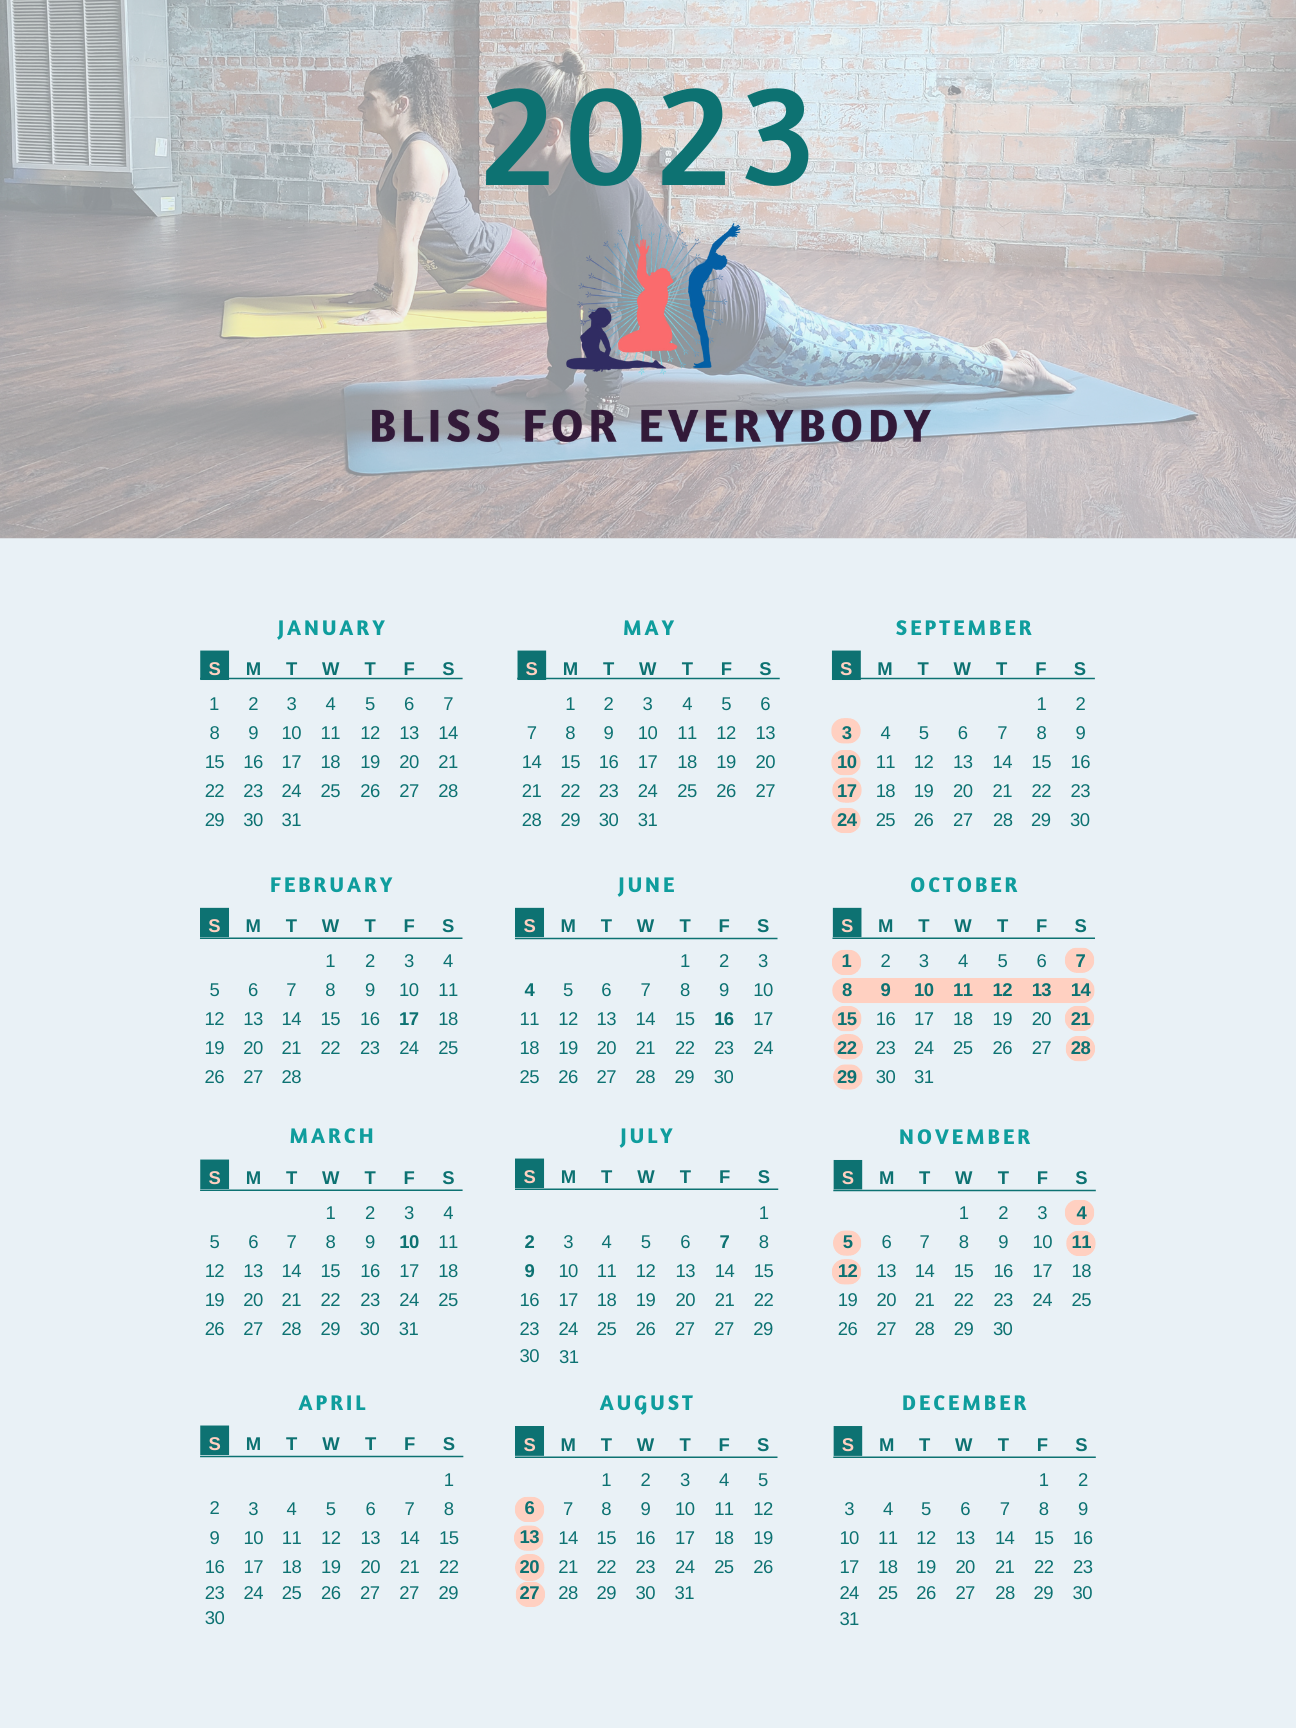 Bliss For EveryBody Yoga Teacher Training Calendar 2023